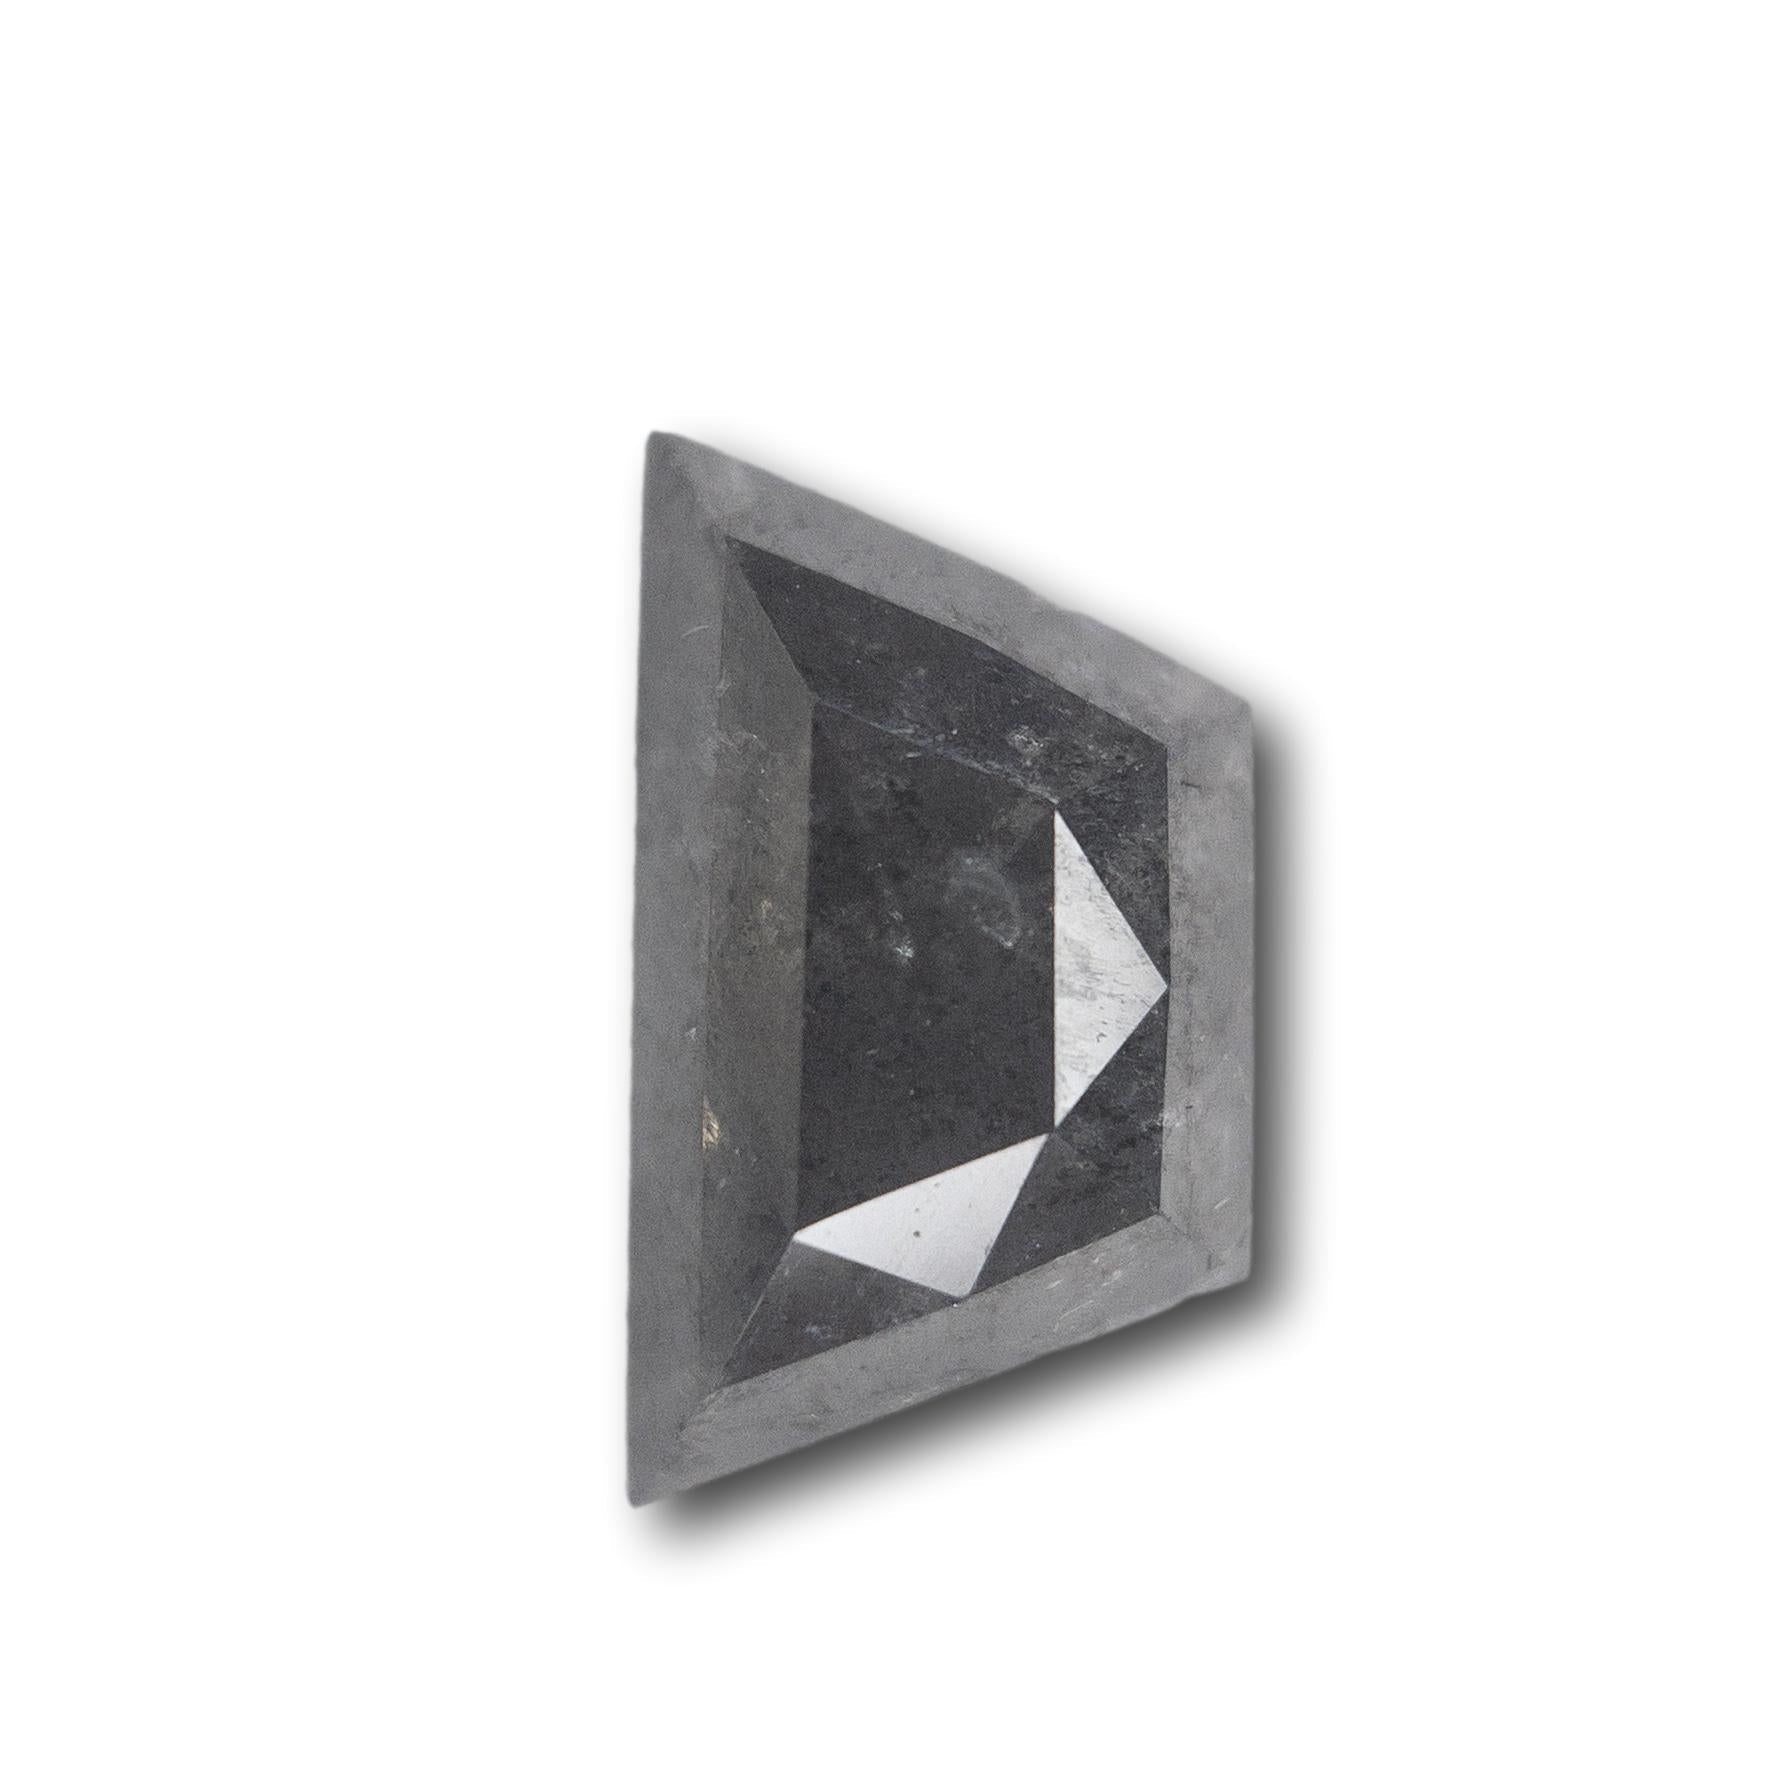 1.17ct | Salt & Pepper Trapezoid Diamond-Modern Rustic Diamond